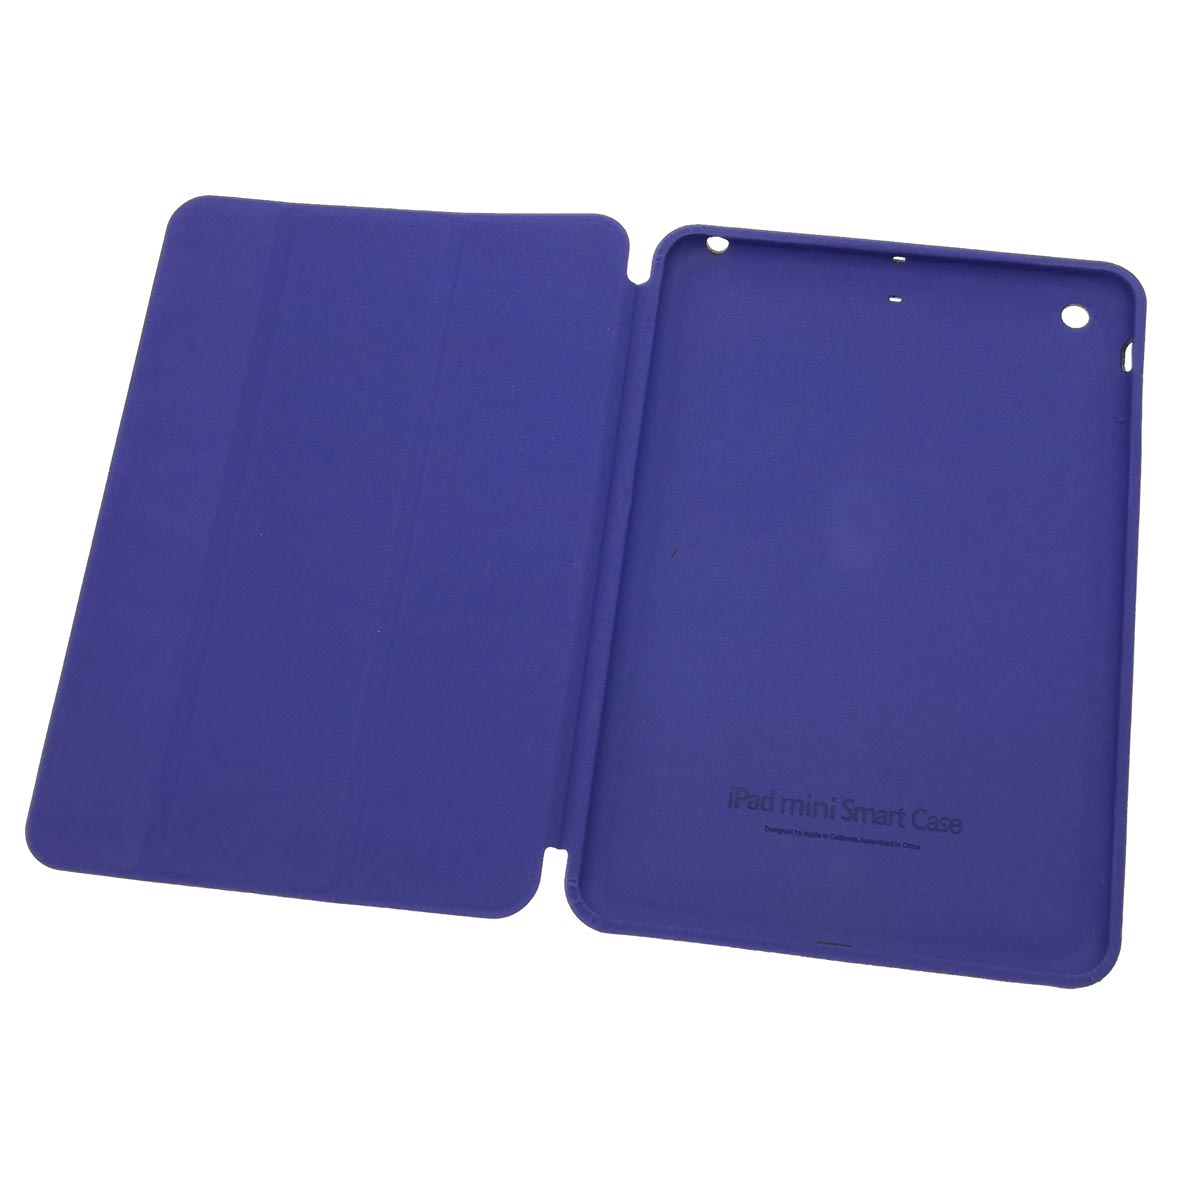 Чехол книжка SMART CASE для APPLE iPad mini, mini 2, mini 3, экокожа, цвет фиолетовый